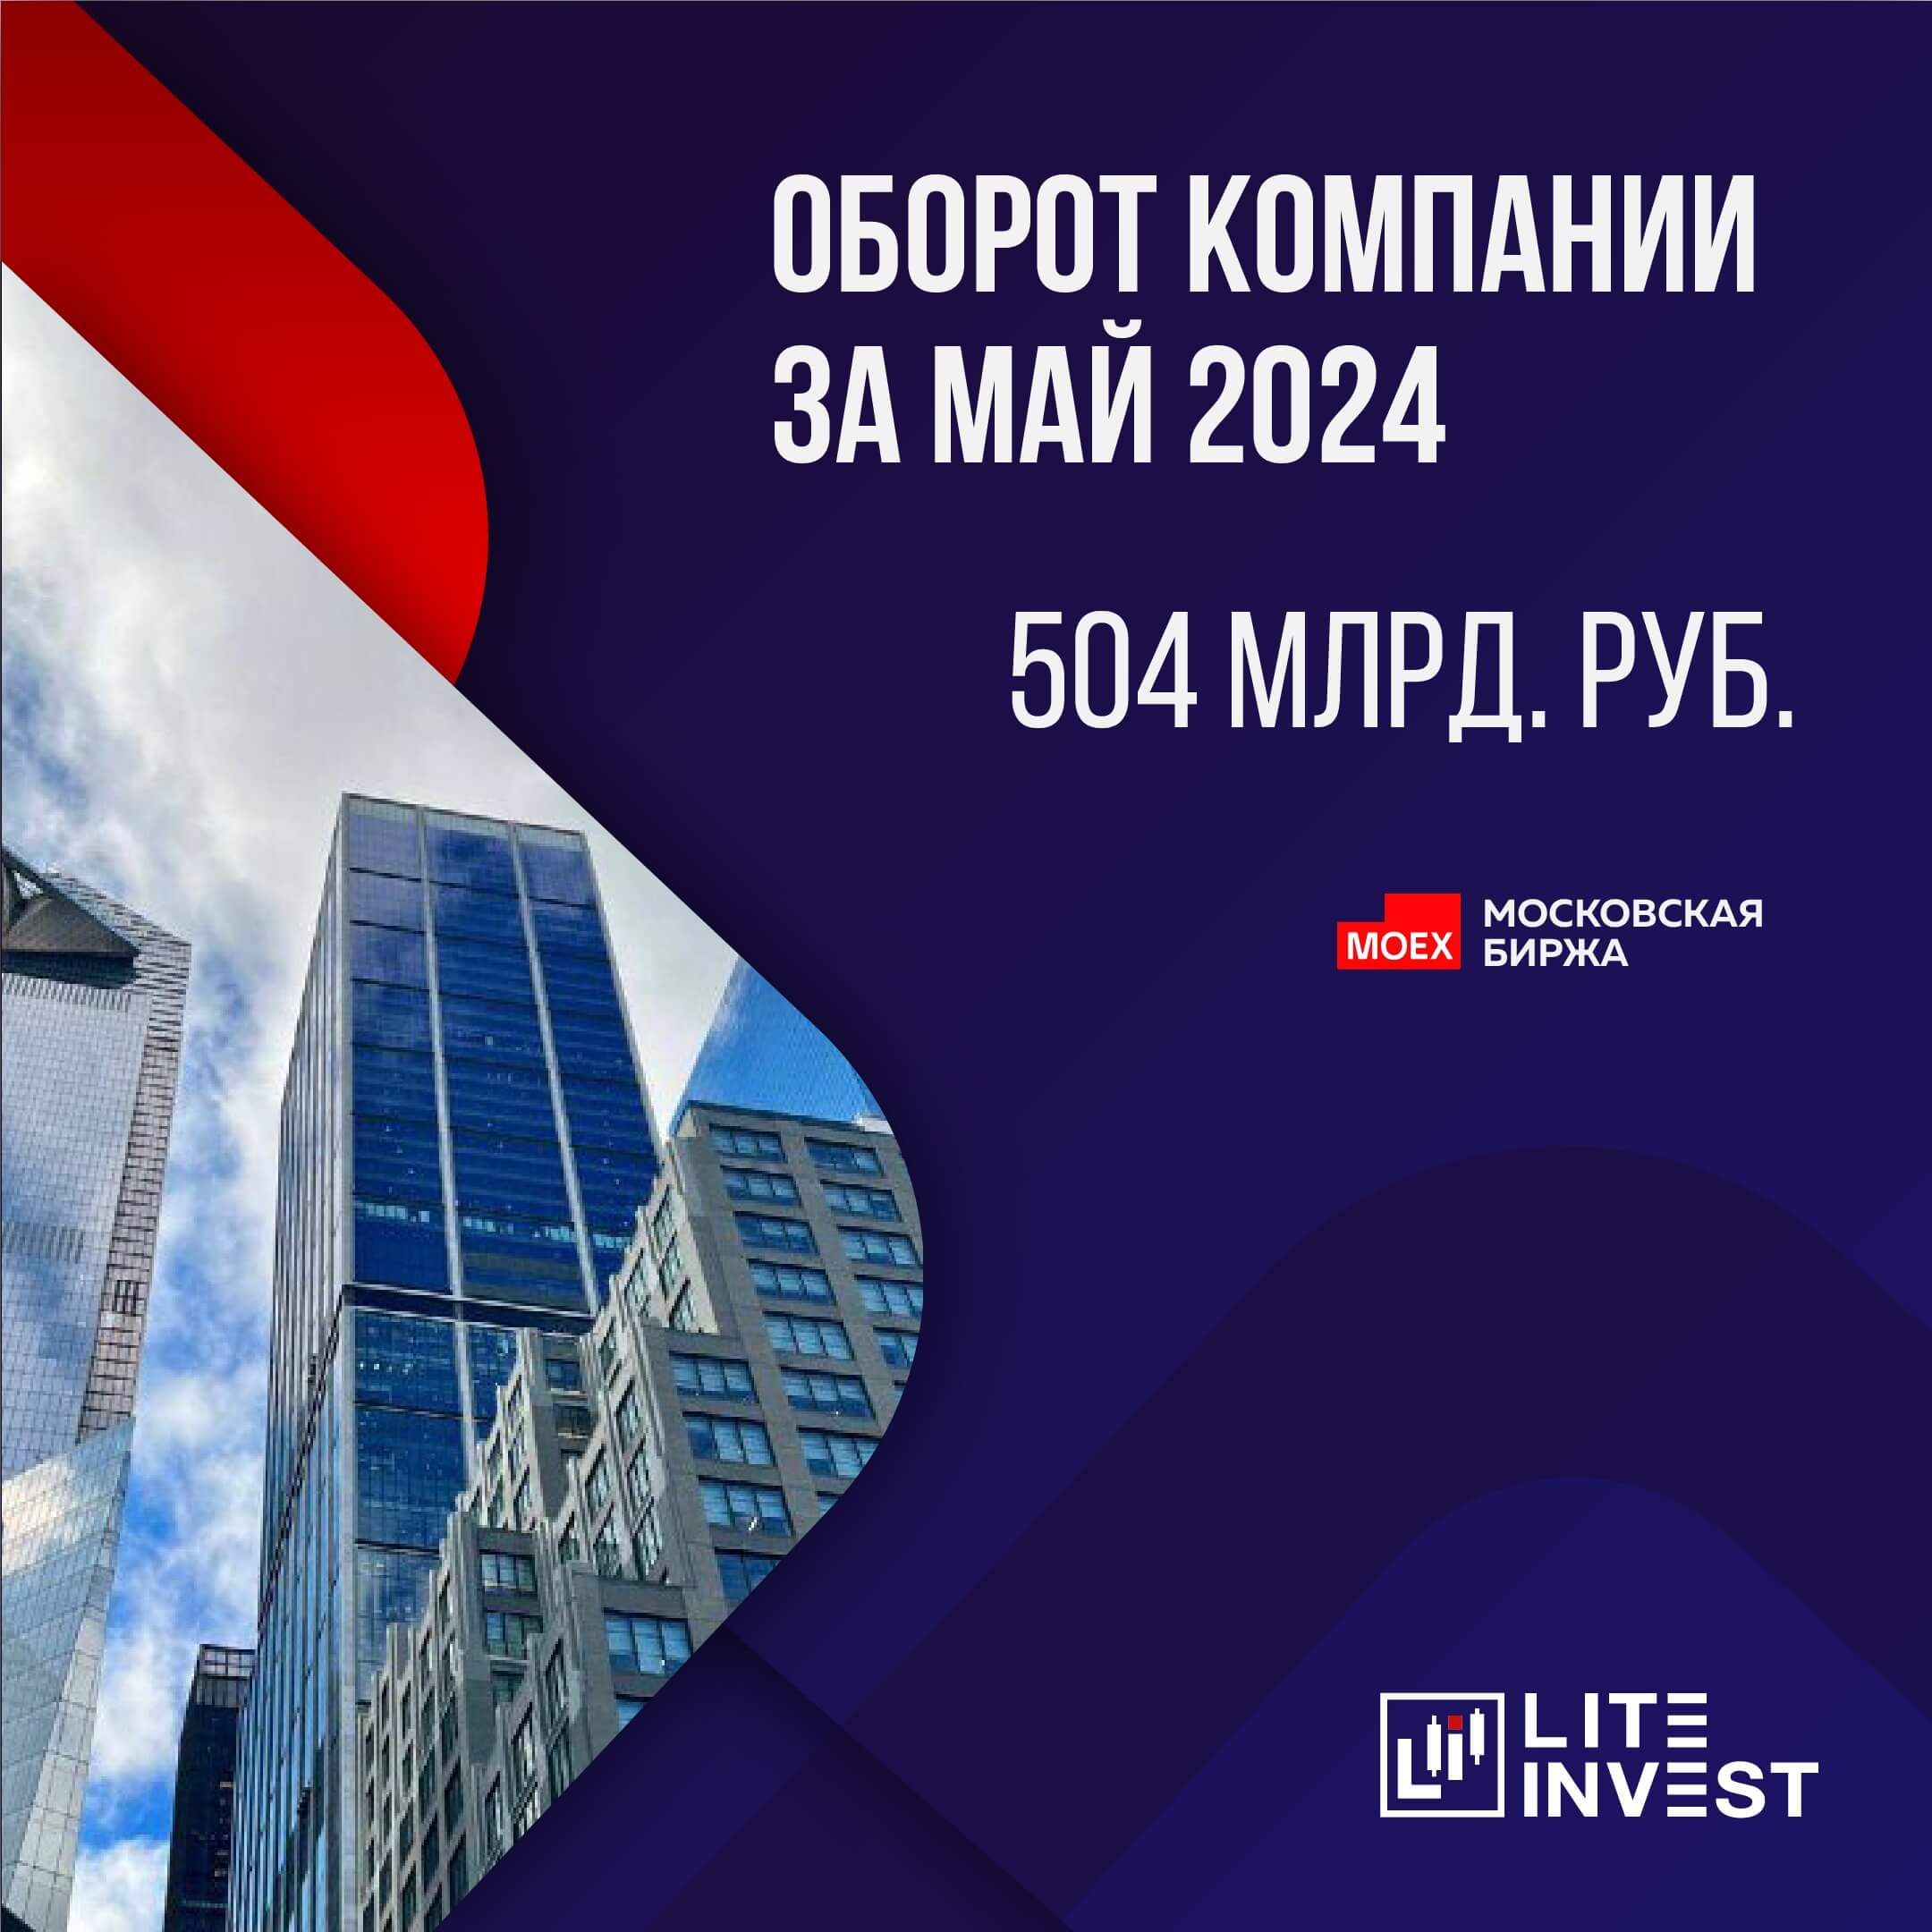 Оборот компании Lite Invest за май 2024 г. составил 504 млрд. руб.